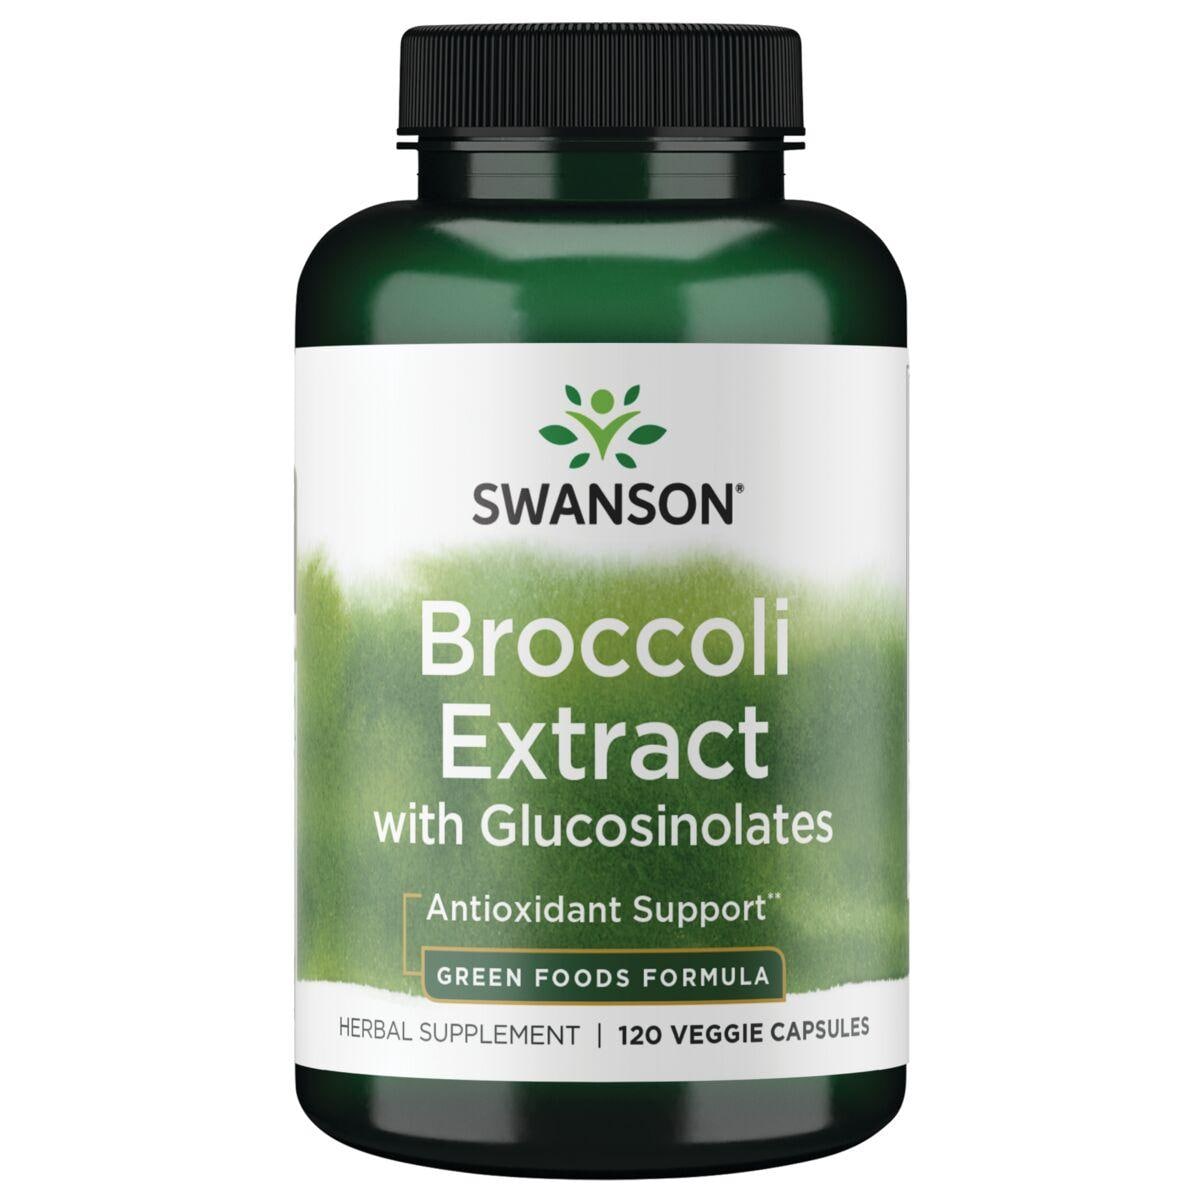 Swanson GreenFoods Formulas Broccoli Extract with Glucosinolates Supplement Vitamin | 600 mg | 120 Veg Caps